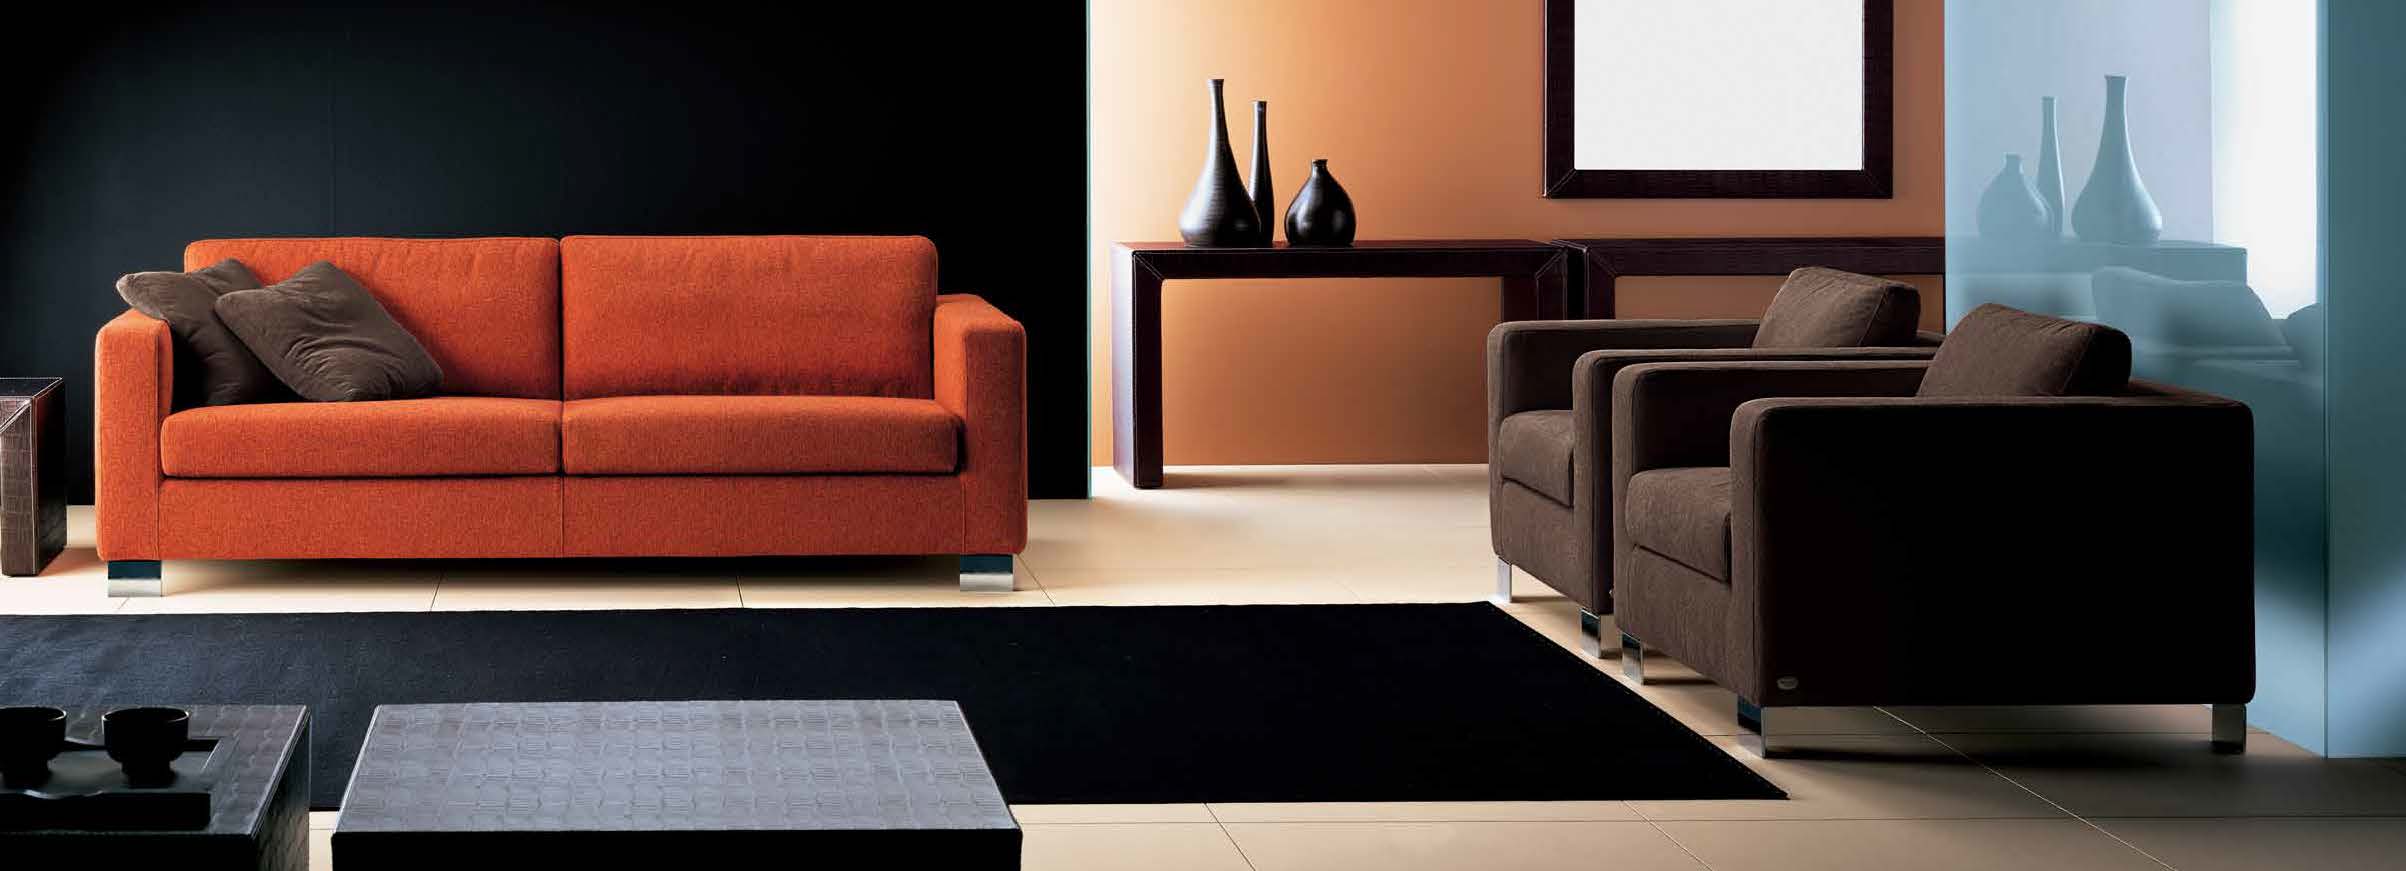 Brands Formerin Classic Living Room, Italy Bogart